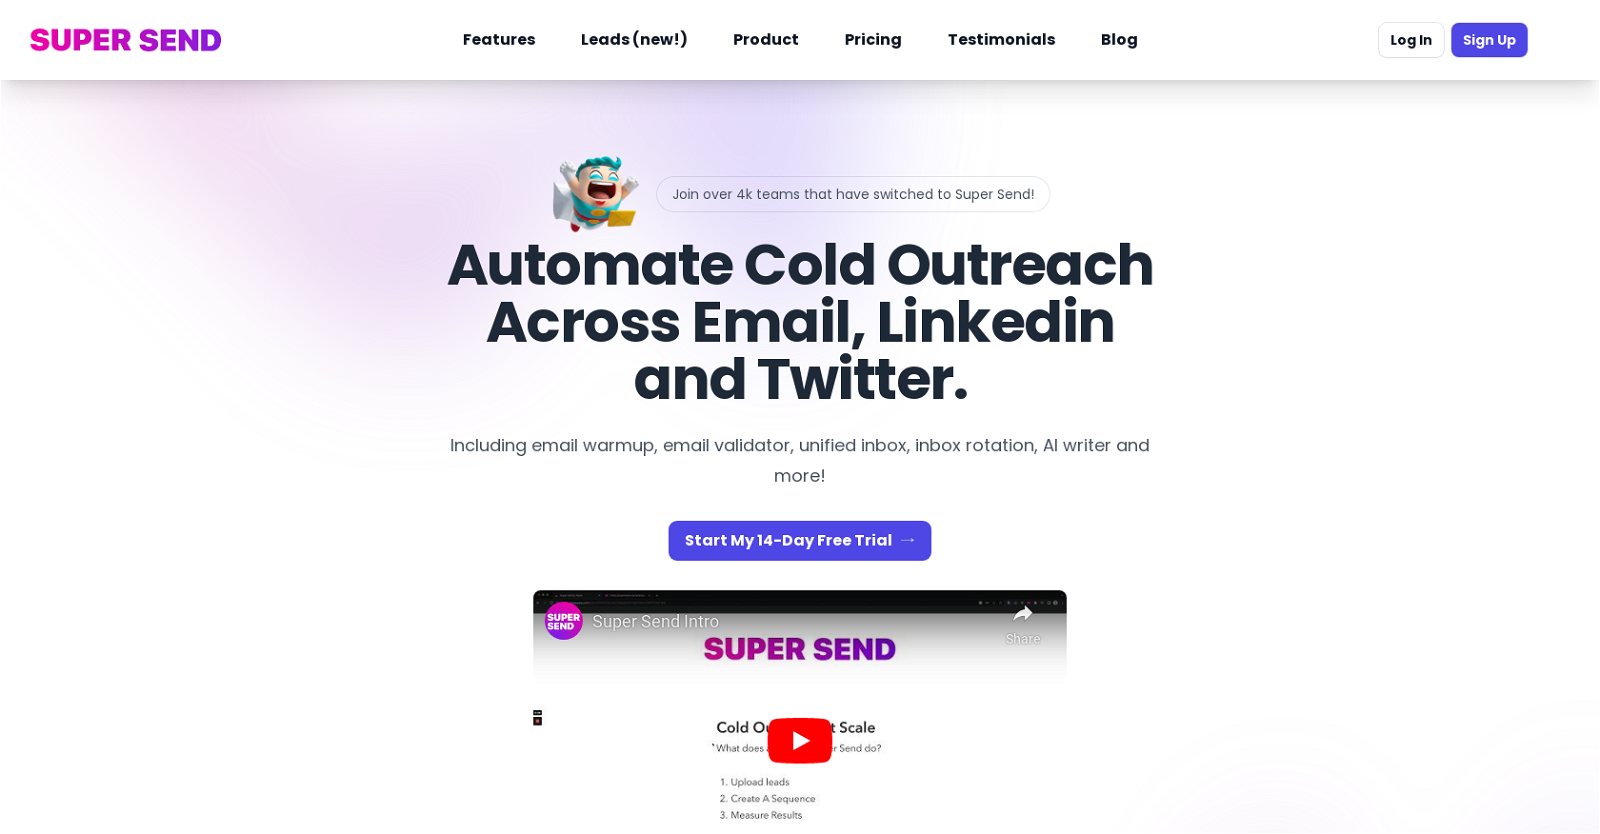 Super Send website